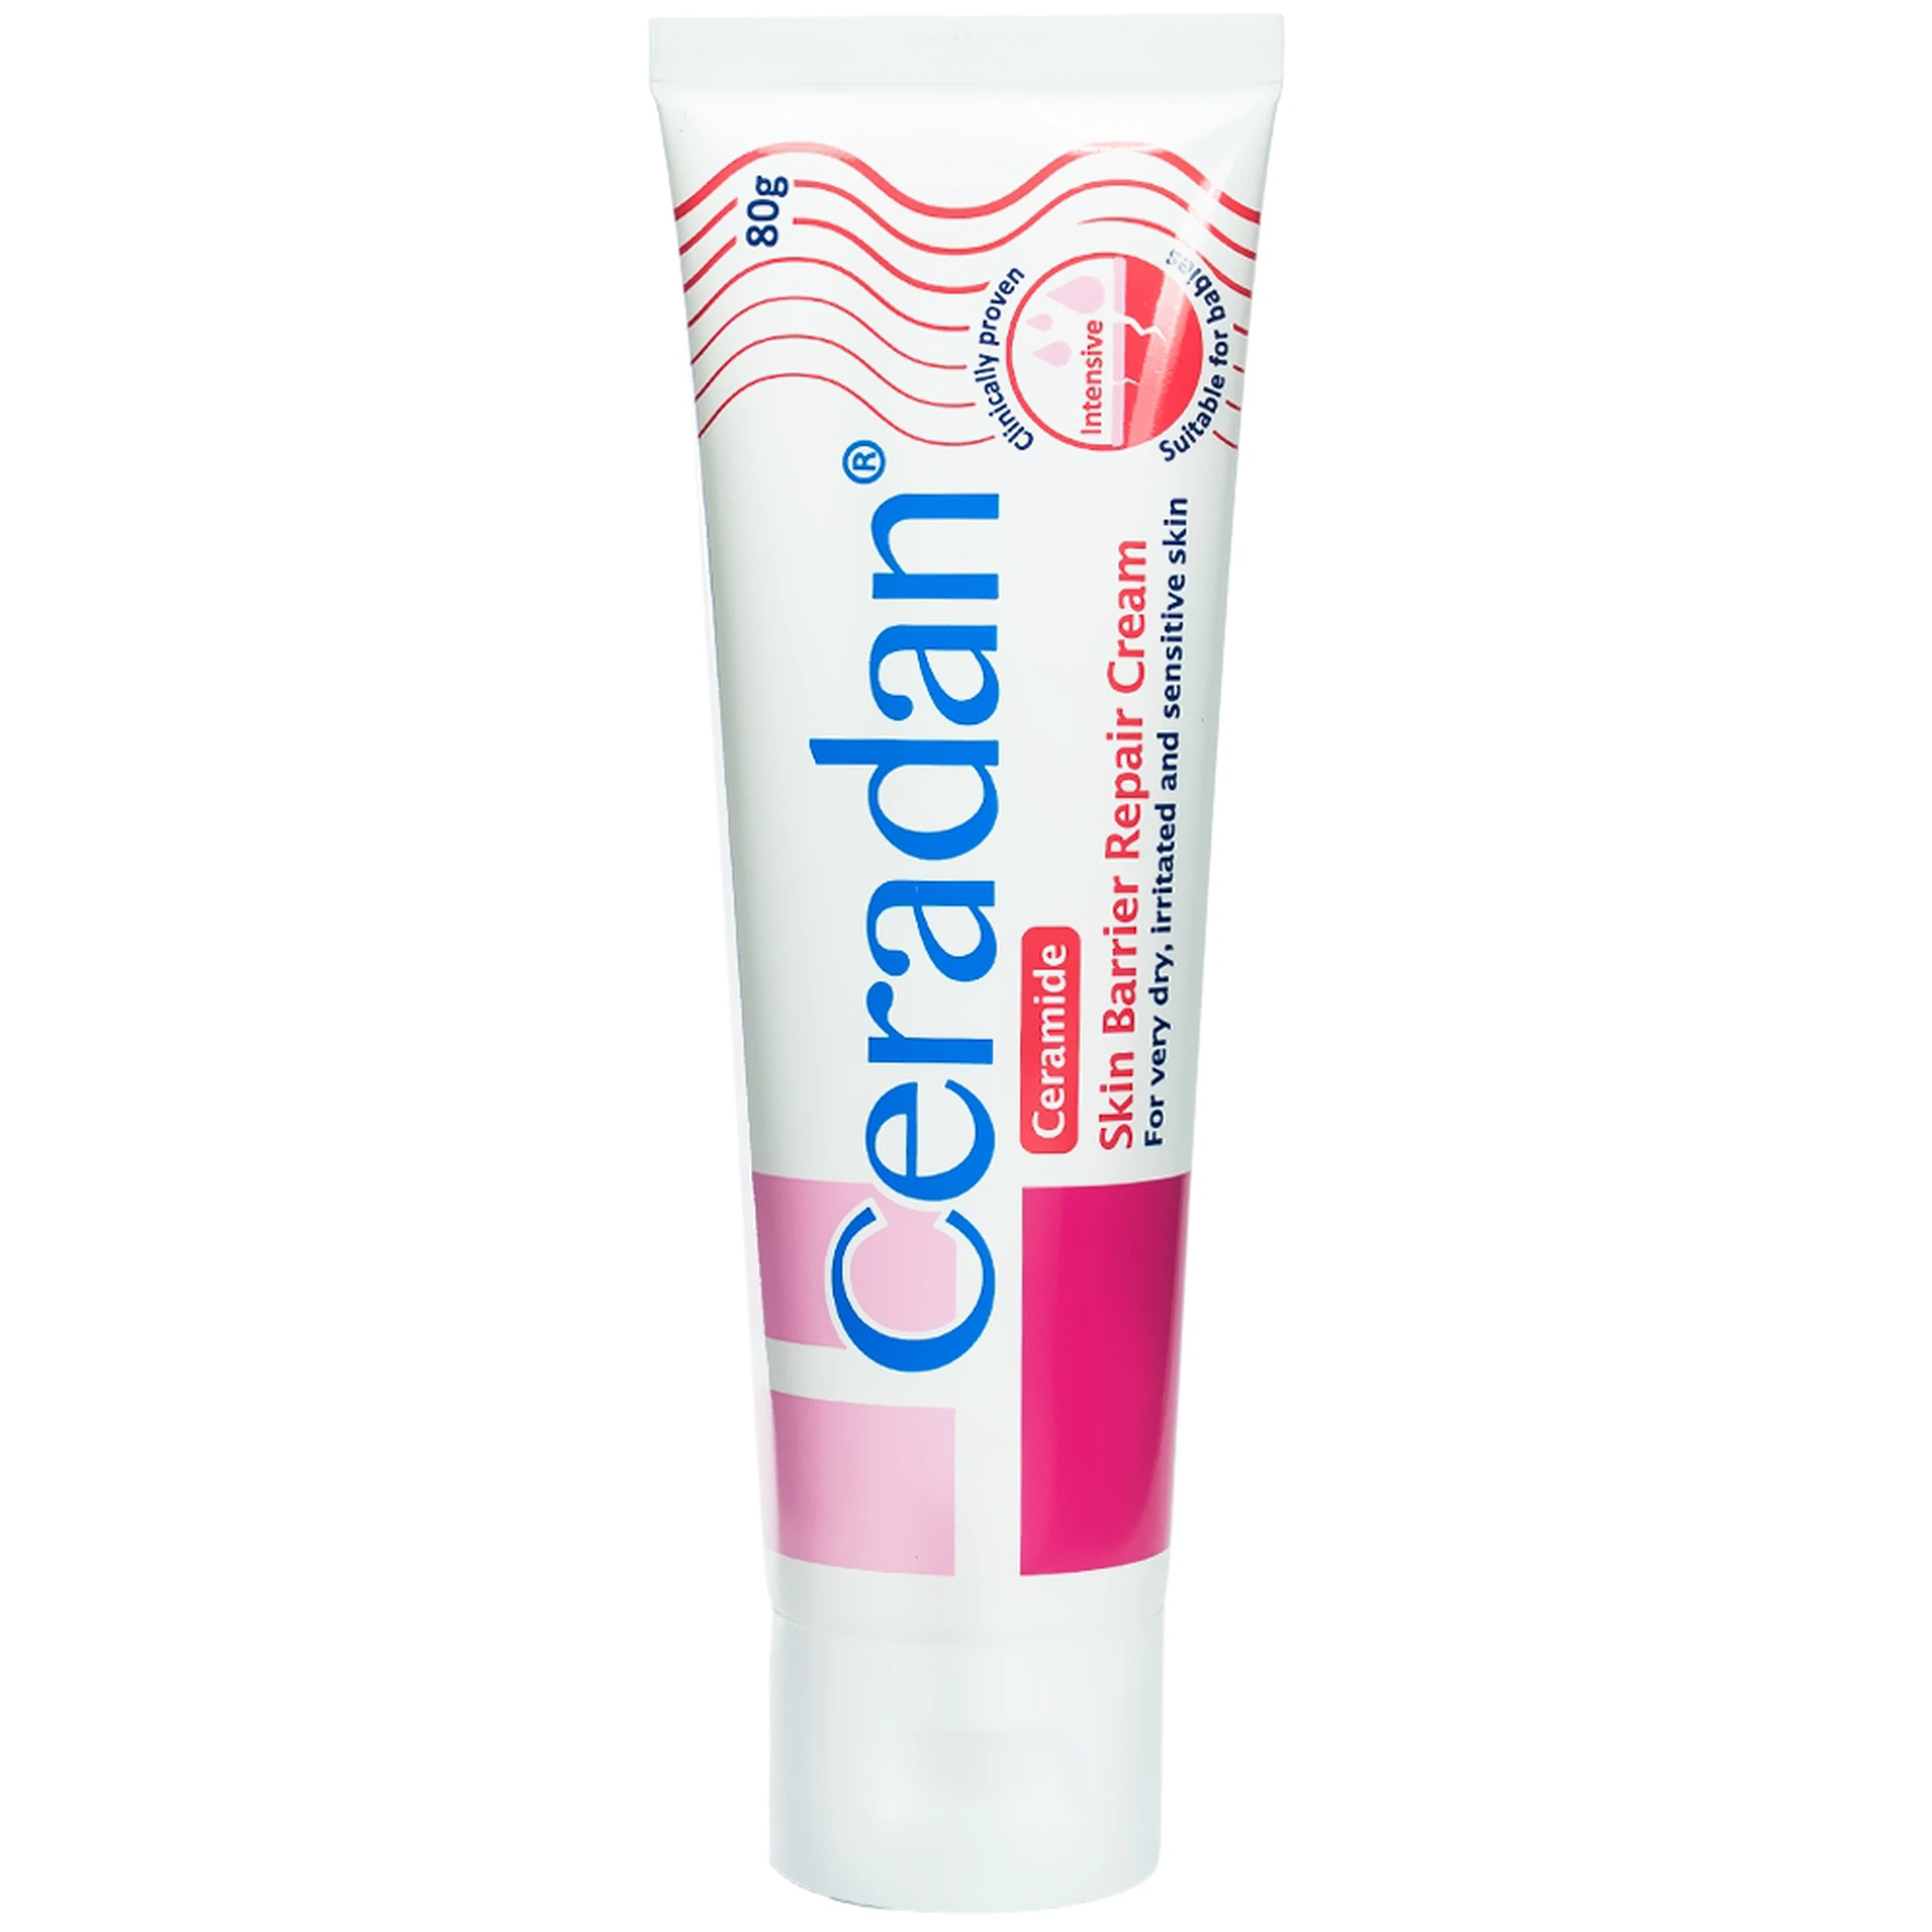 Kem phục hồi da Ceradan Ceramide Skin Barrier Repair Cream dành cho da khô, kích ứng và nhạy cảm (80g)